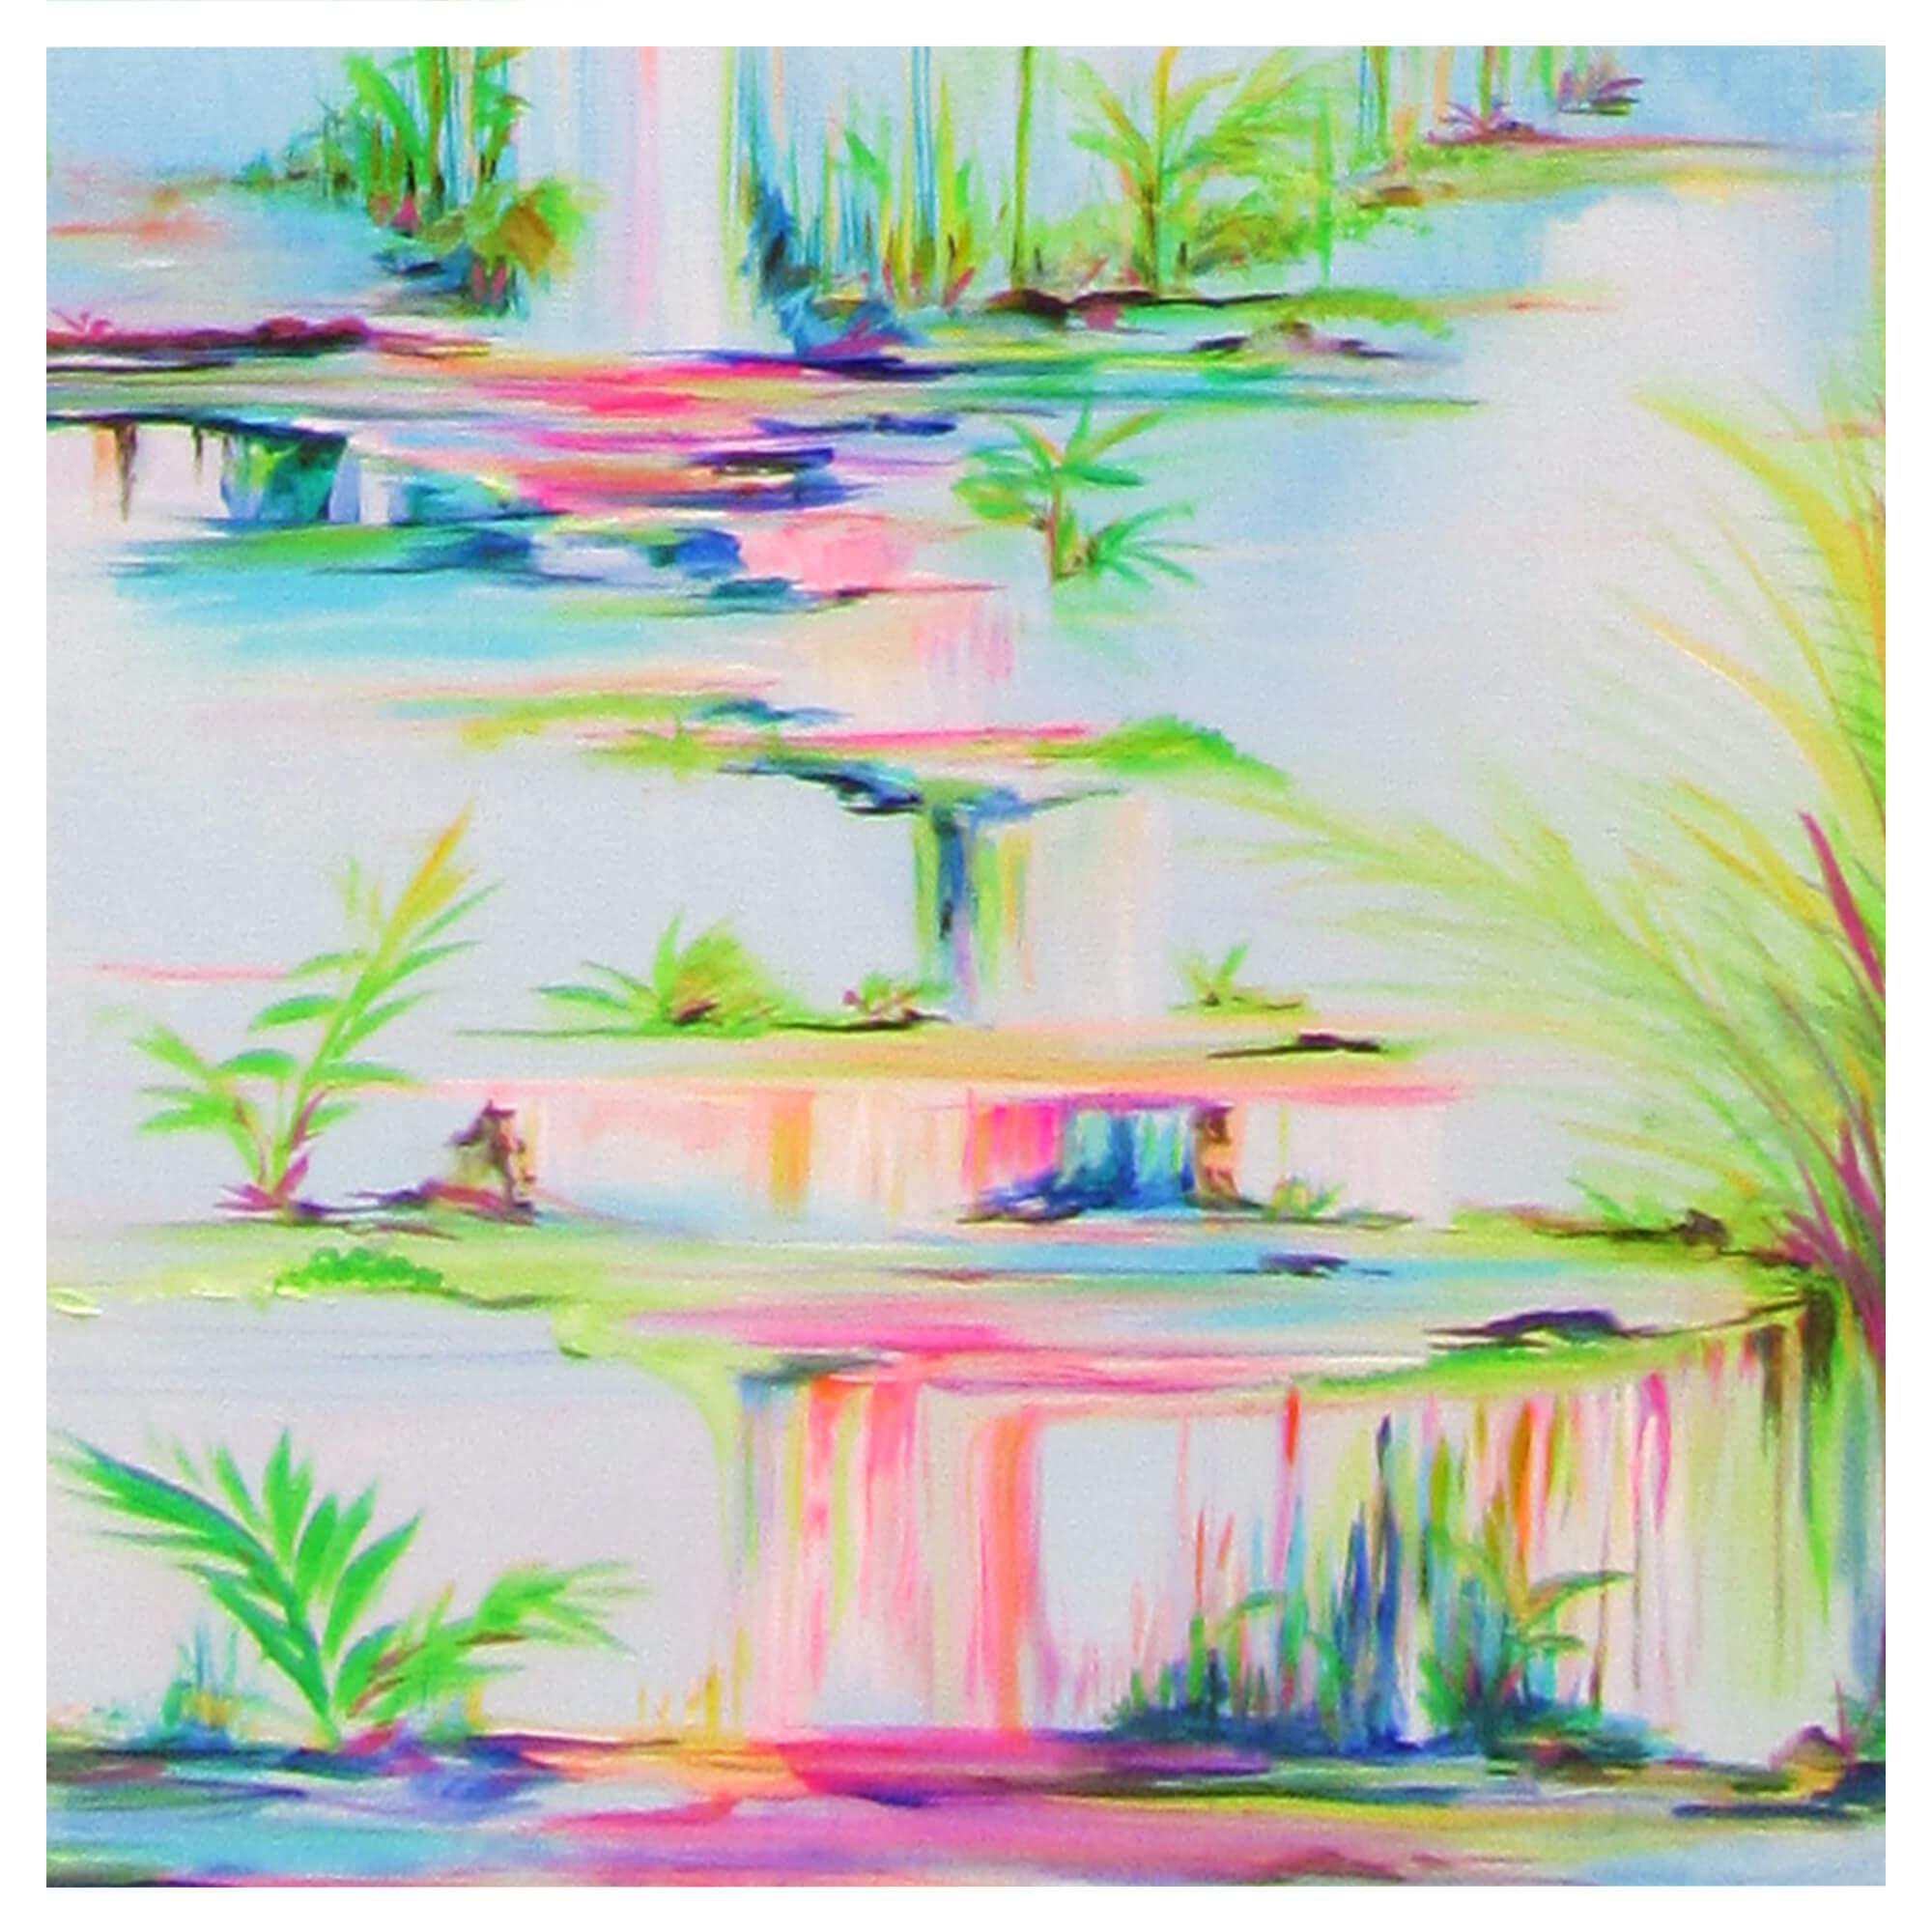 Vibrant colored flowing waters by Hawaii artist Jess Burda